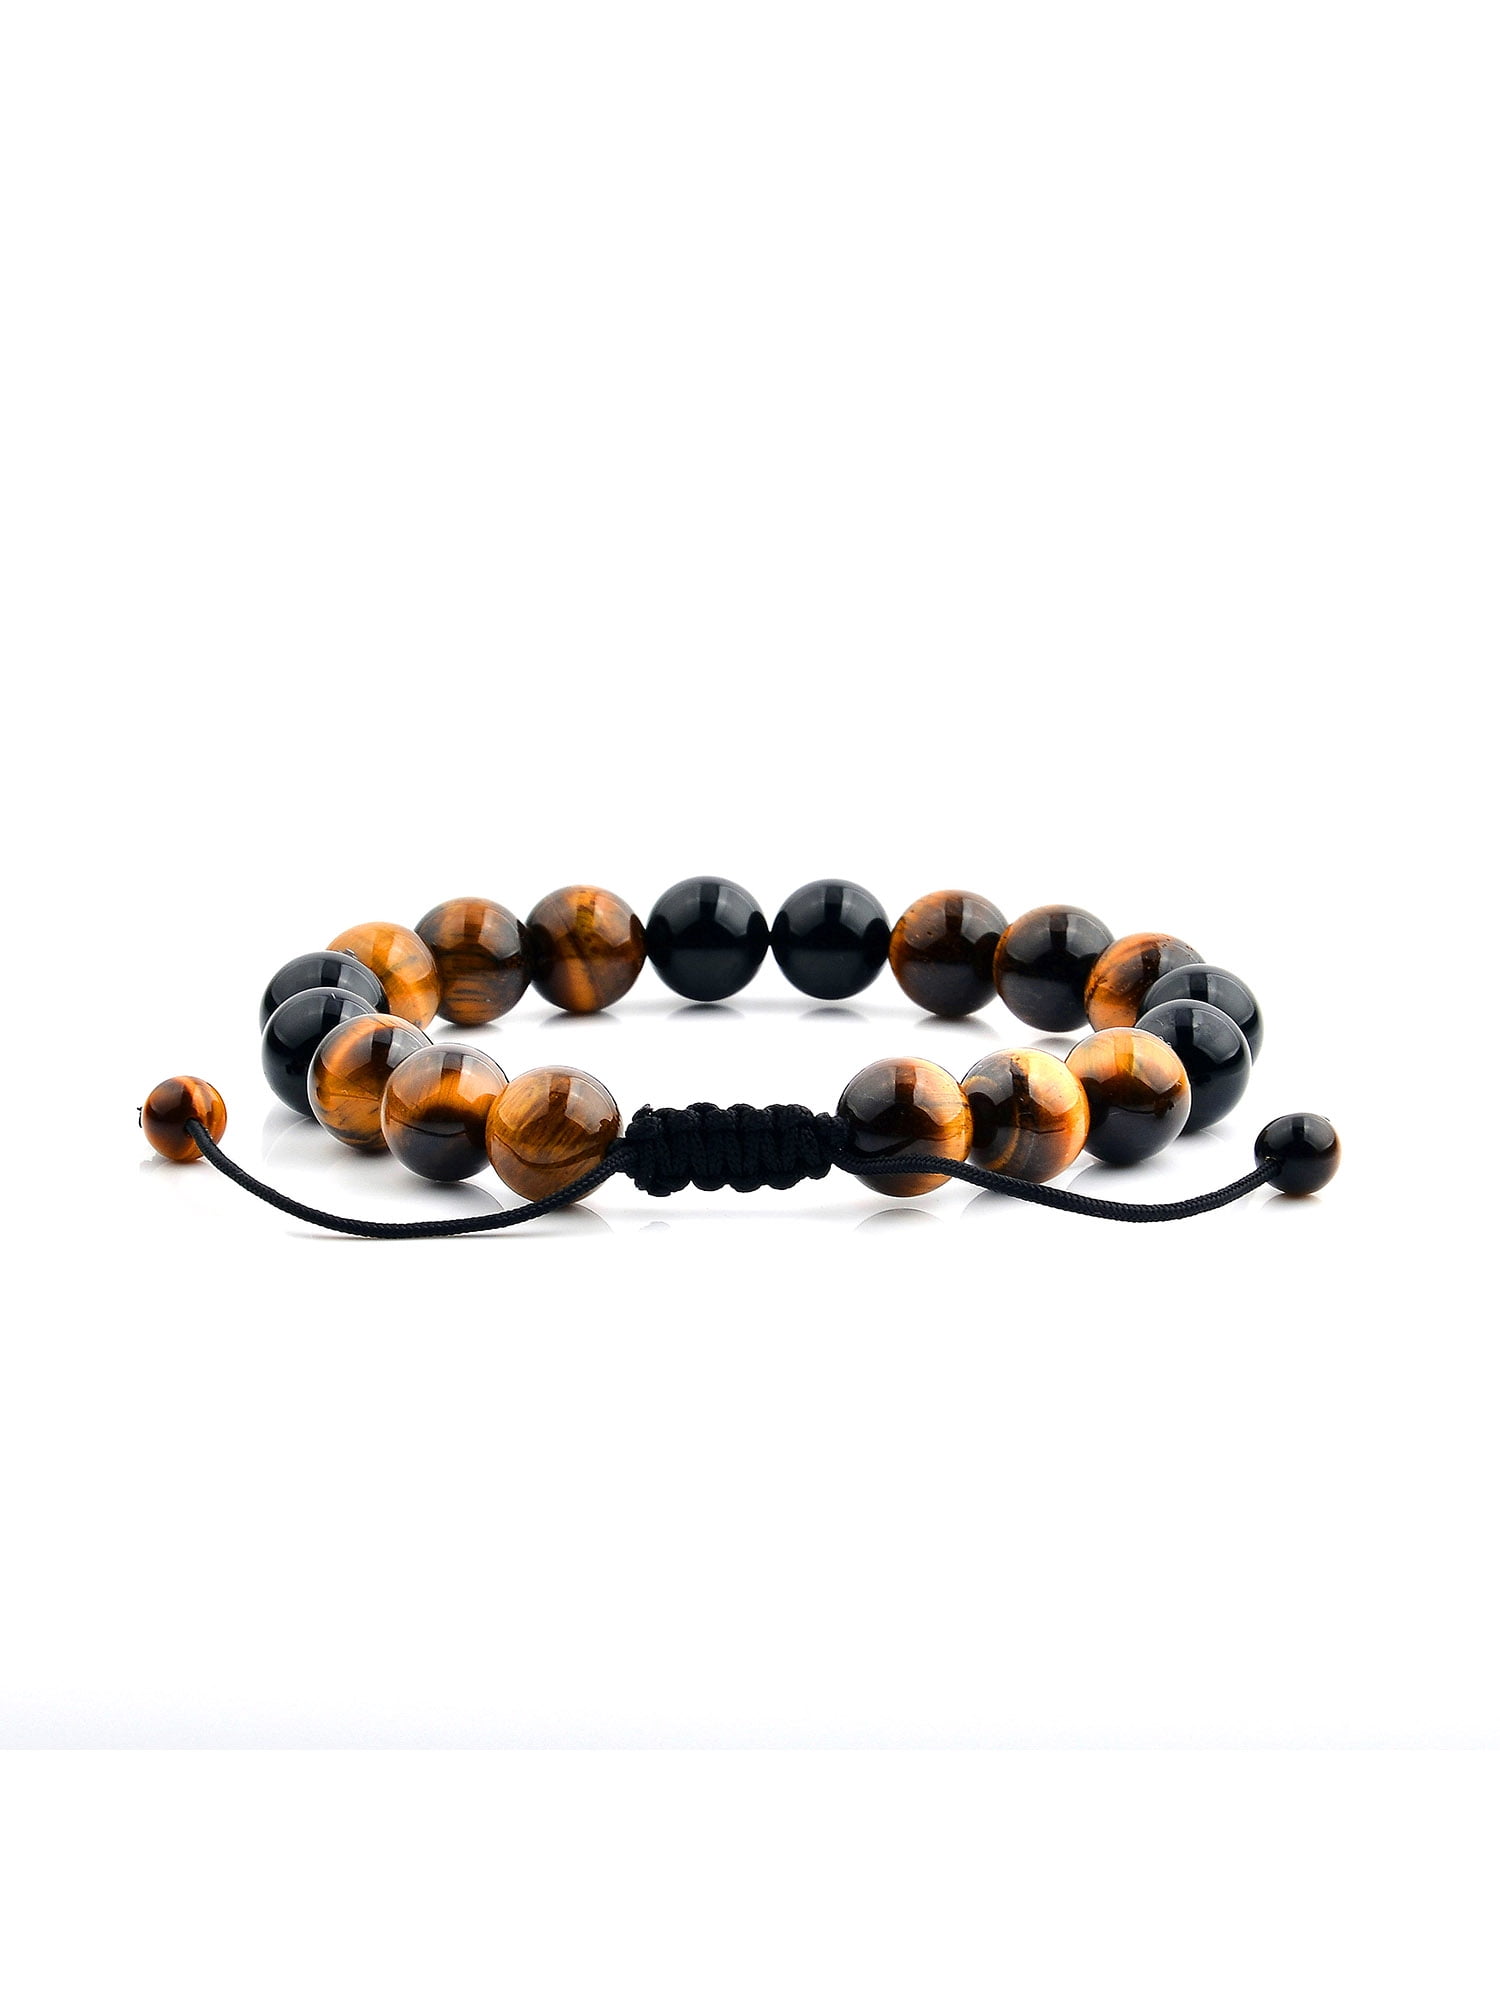 keusn mens bracelets fashion 12 constellations stone tiger eye bracelet  elastic bracelets stress relief yoga beads adjustable anxiety bracelet